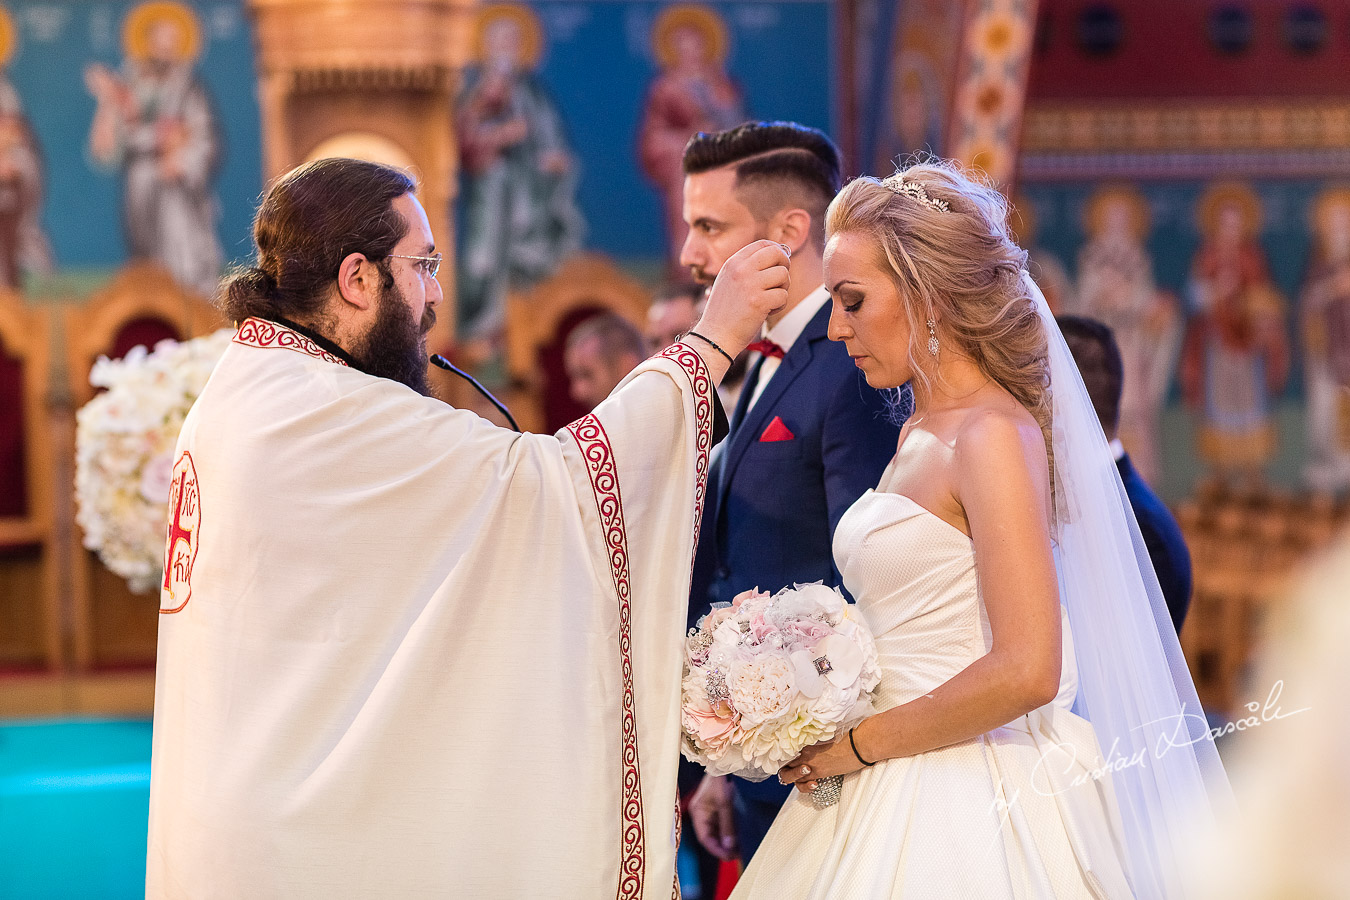 Church ceremony photographed at a wedding in Nicosia by Cyprus Wedding Photographer Cristian Dascalu